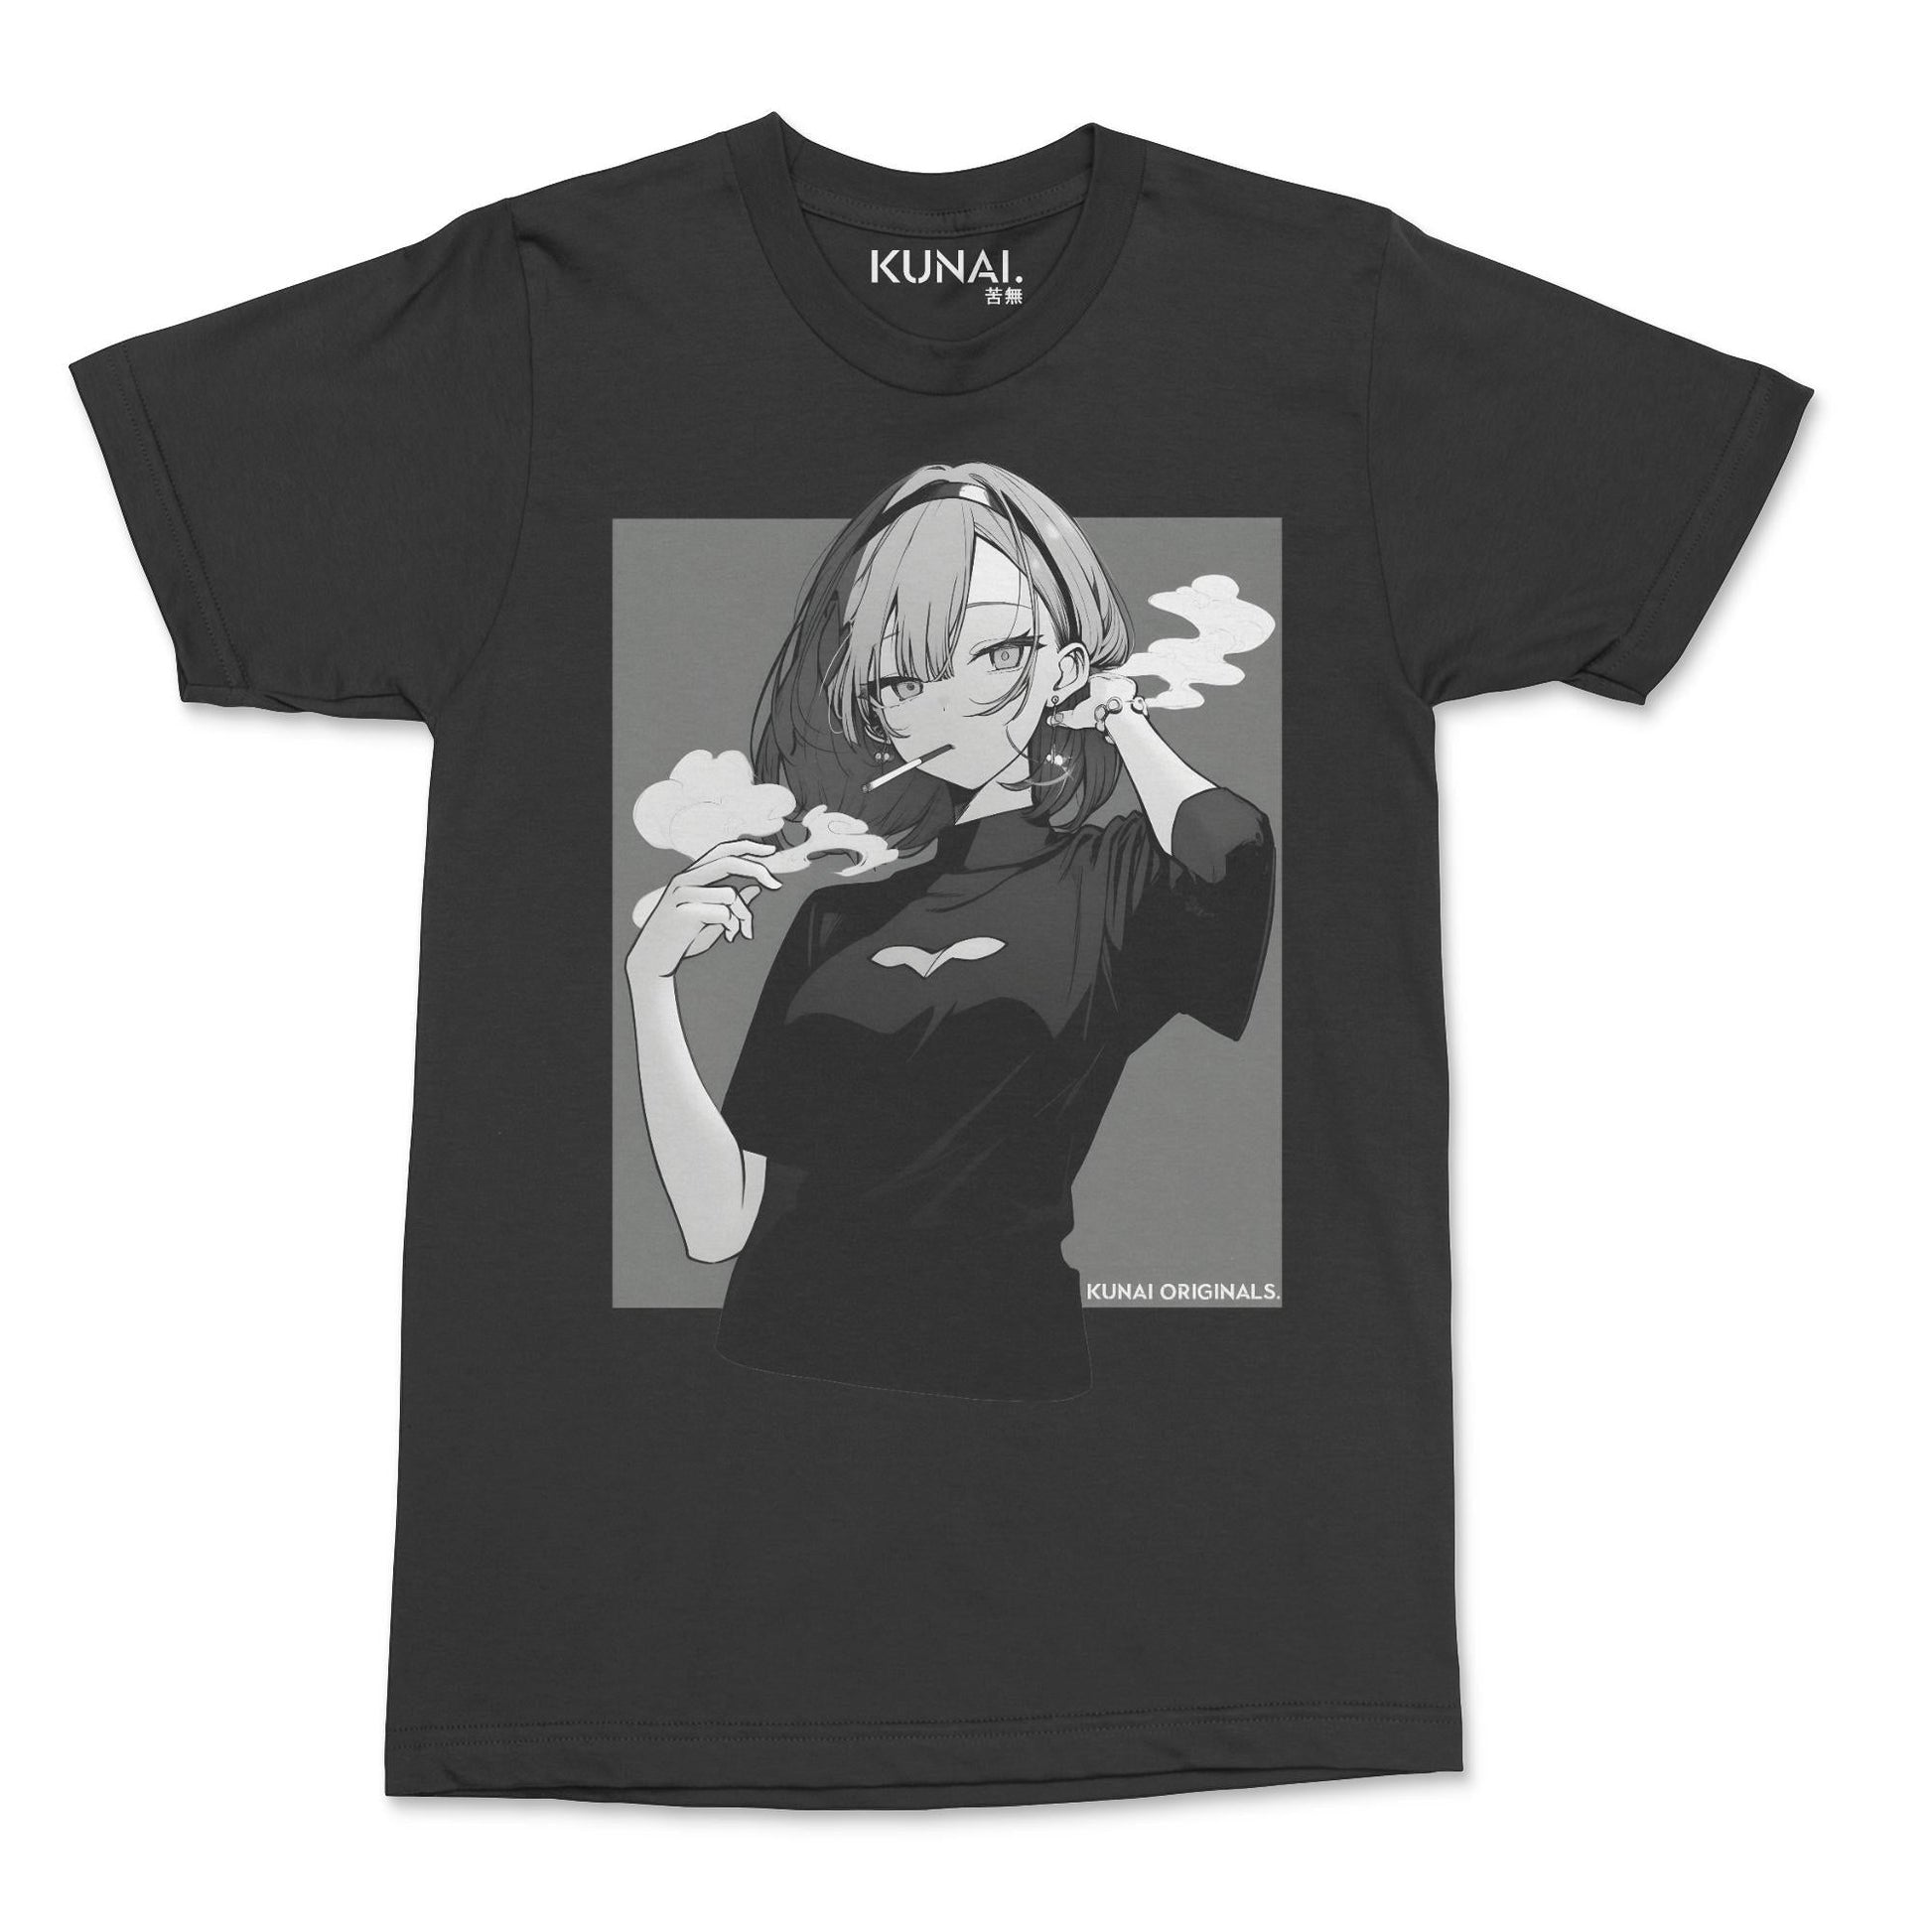 Up in Smoke Unisex Men Women Streetwear Graphic T-Shirt Black / S